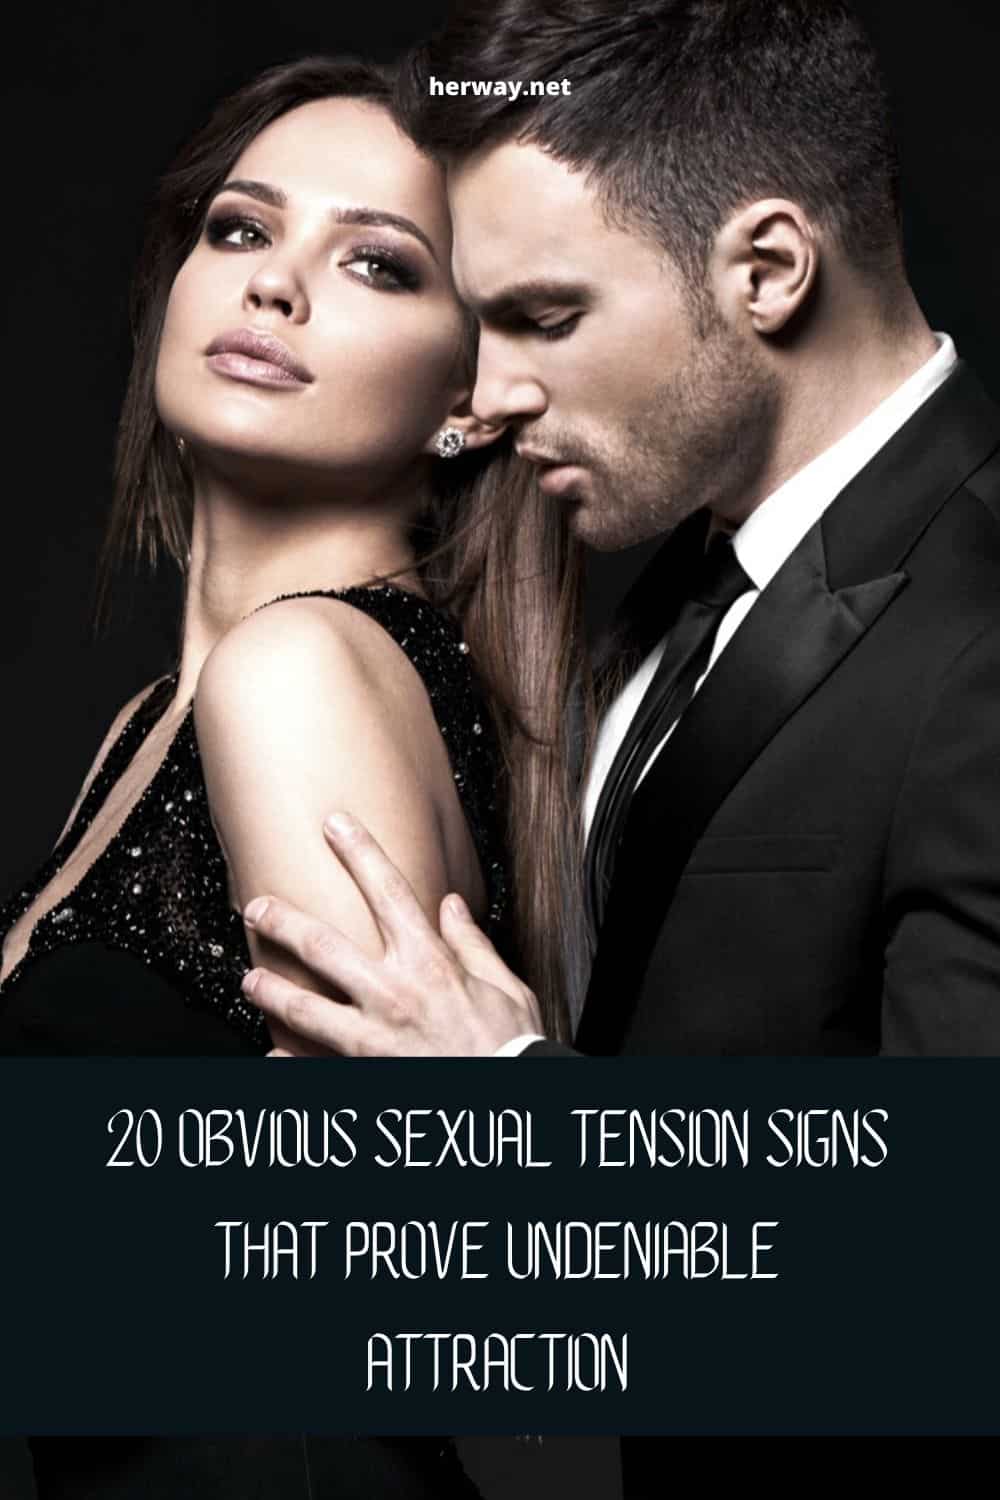 Sexual tension signs in men